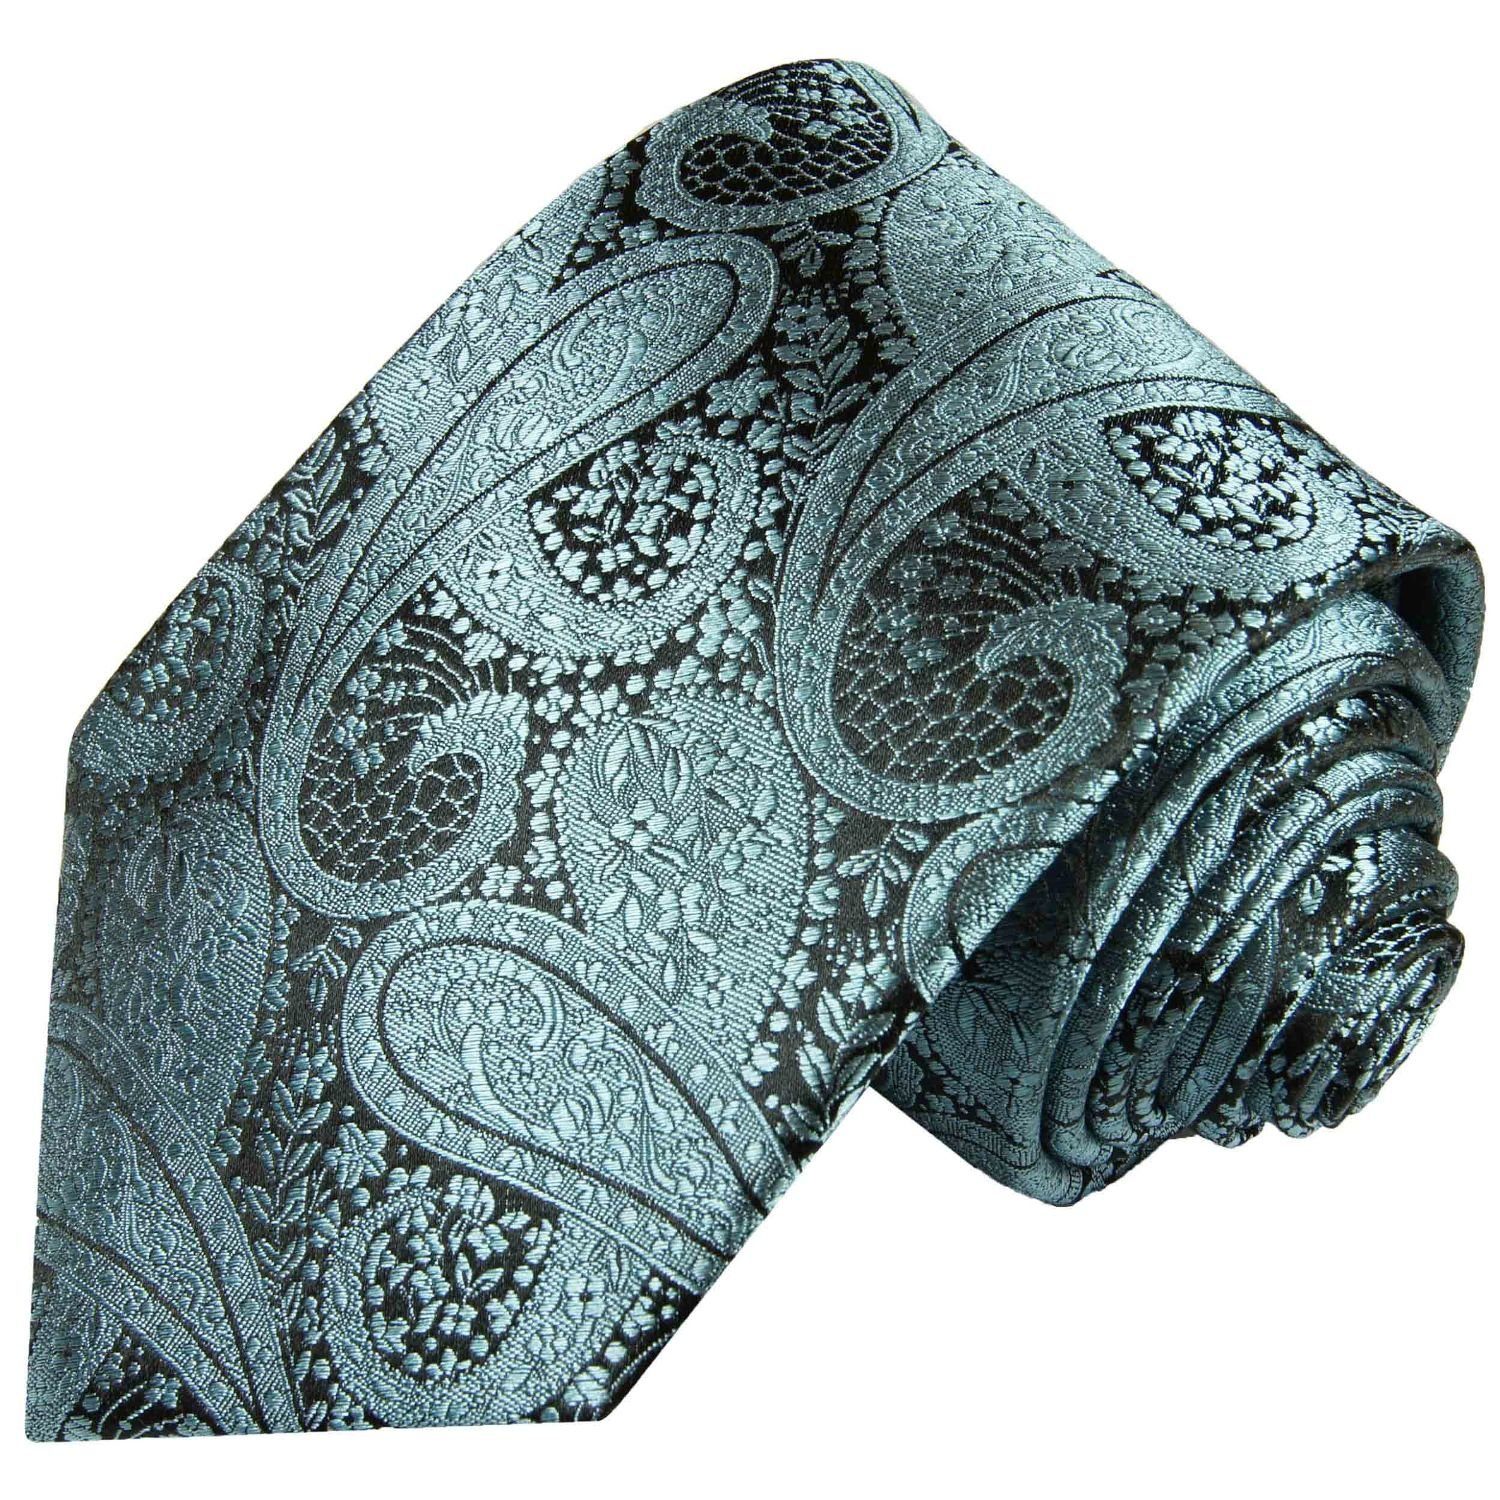 Paul Malone Krawatte (6cm), 100% Herren Schlips türkis schwarz paisley Seidenkrawatte 590 Elegante Seide brokat Schmal